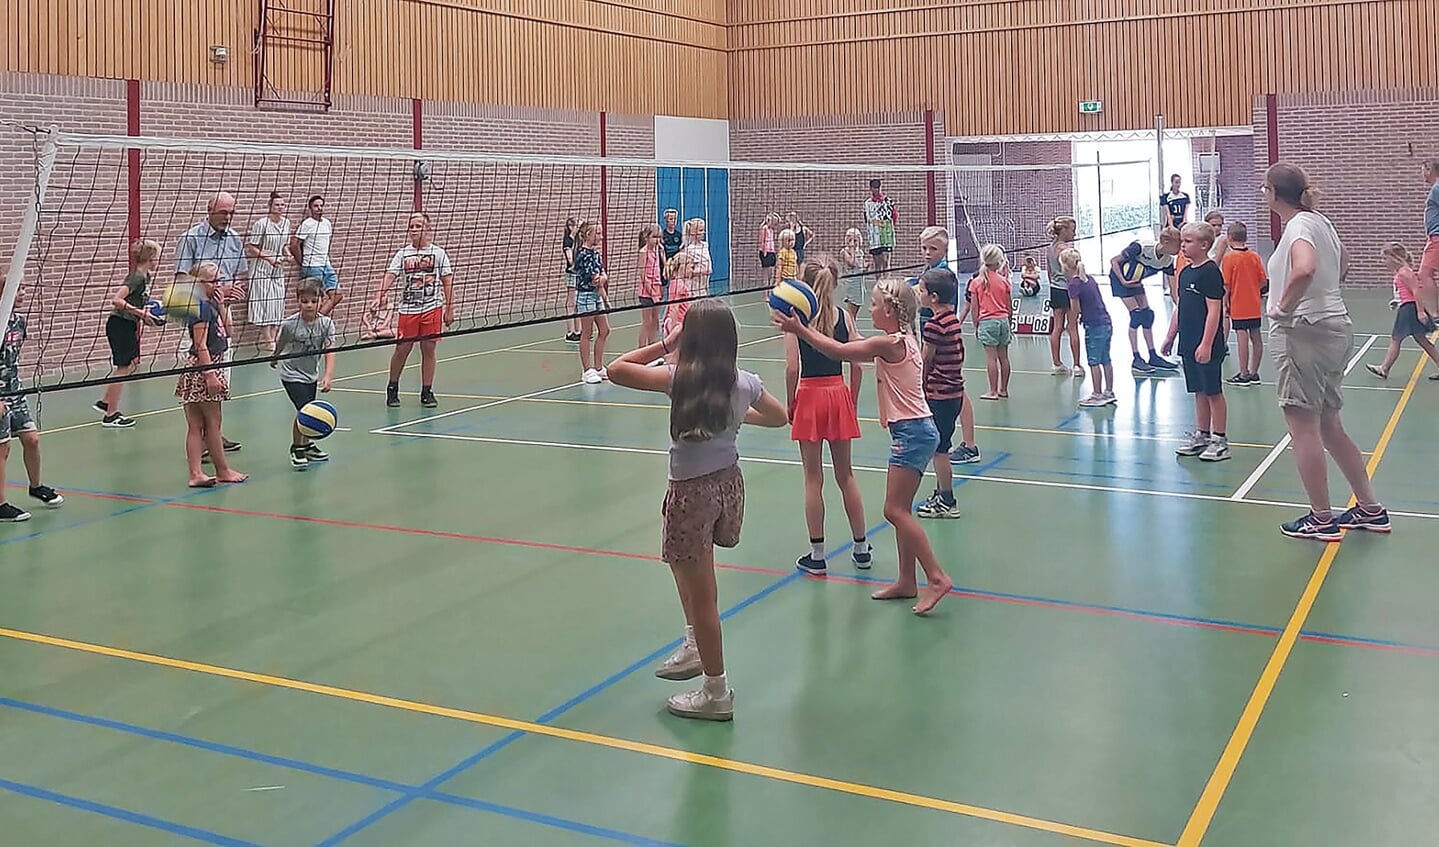 Volleybal workshop in de gymzaal.